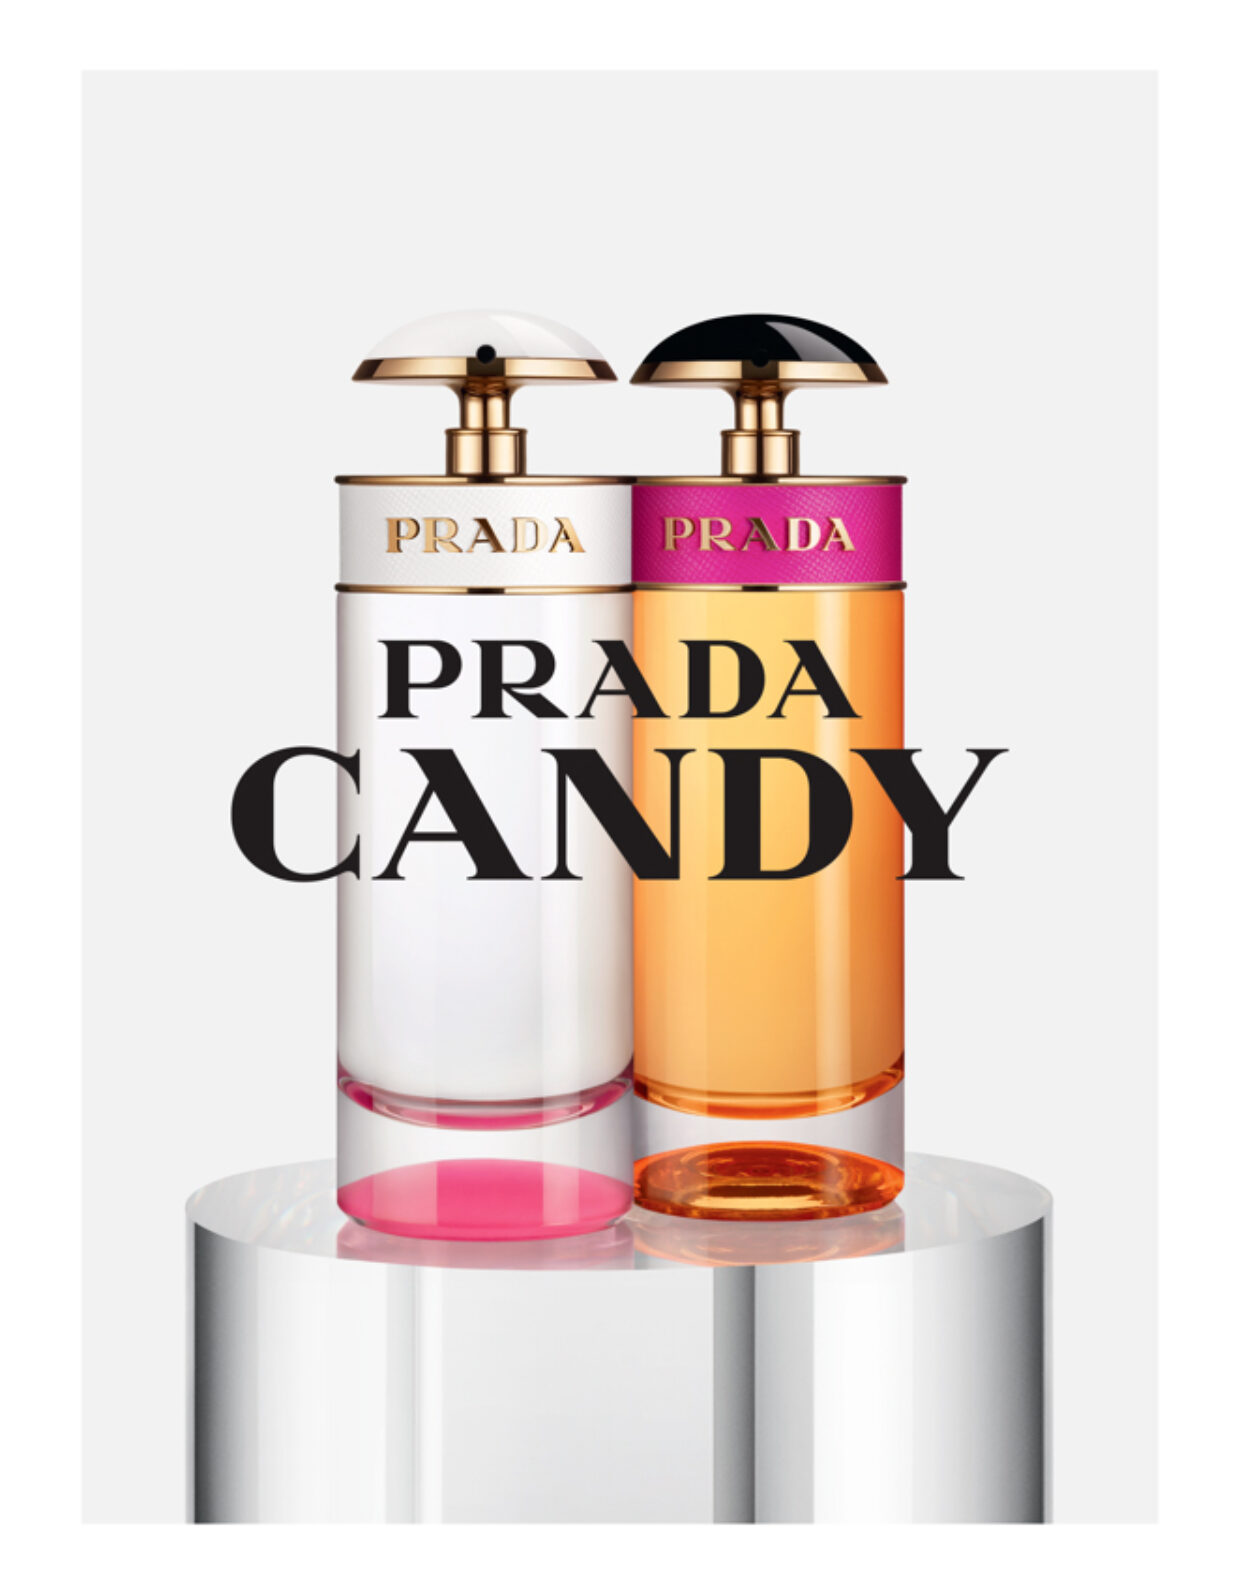 Prada Candy by Robin Broadbent | 1